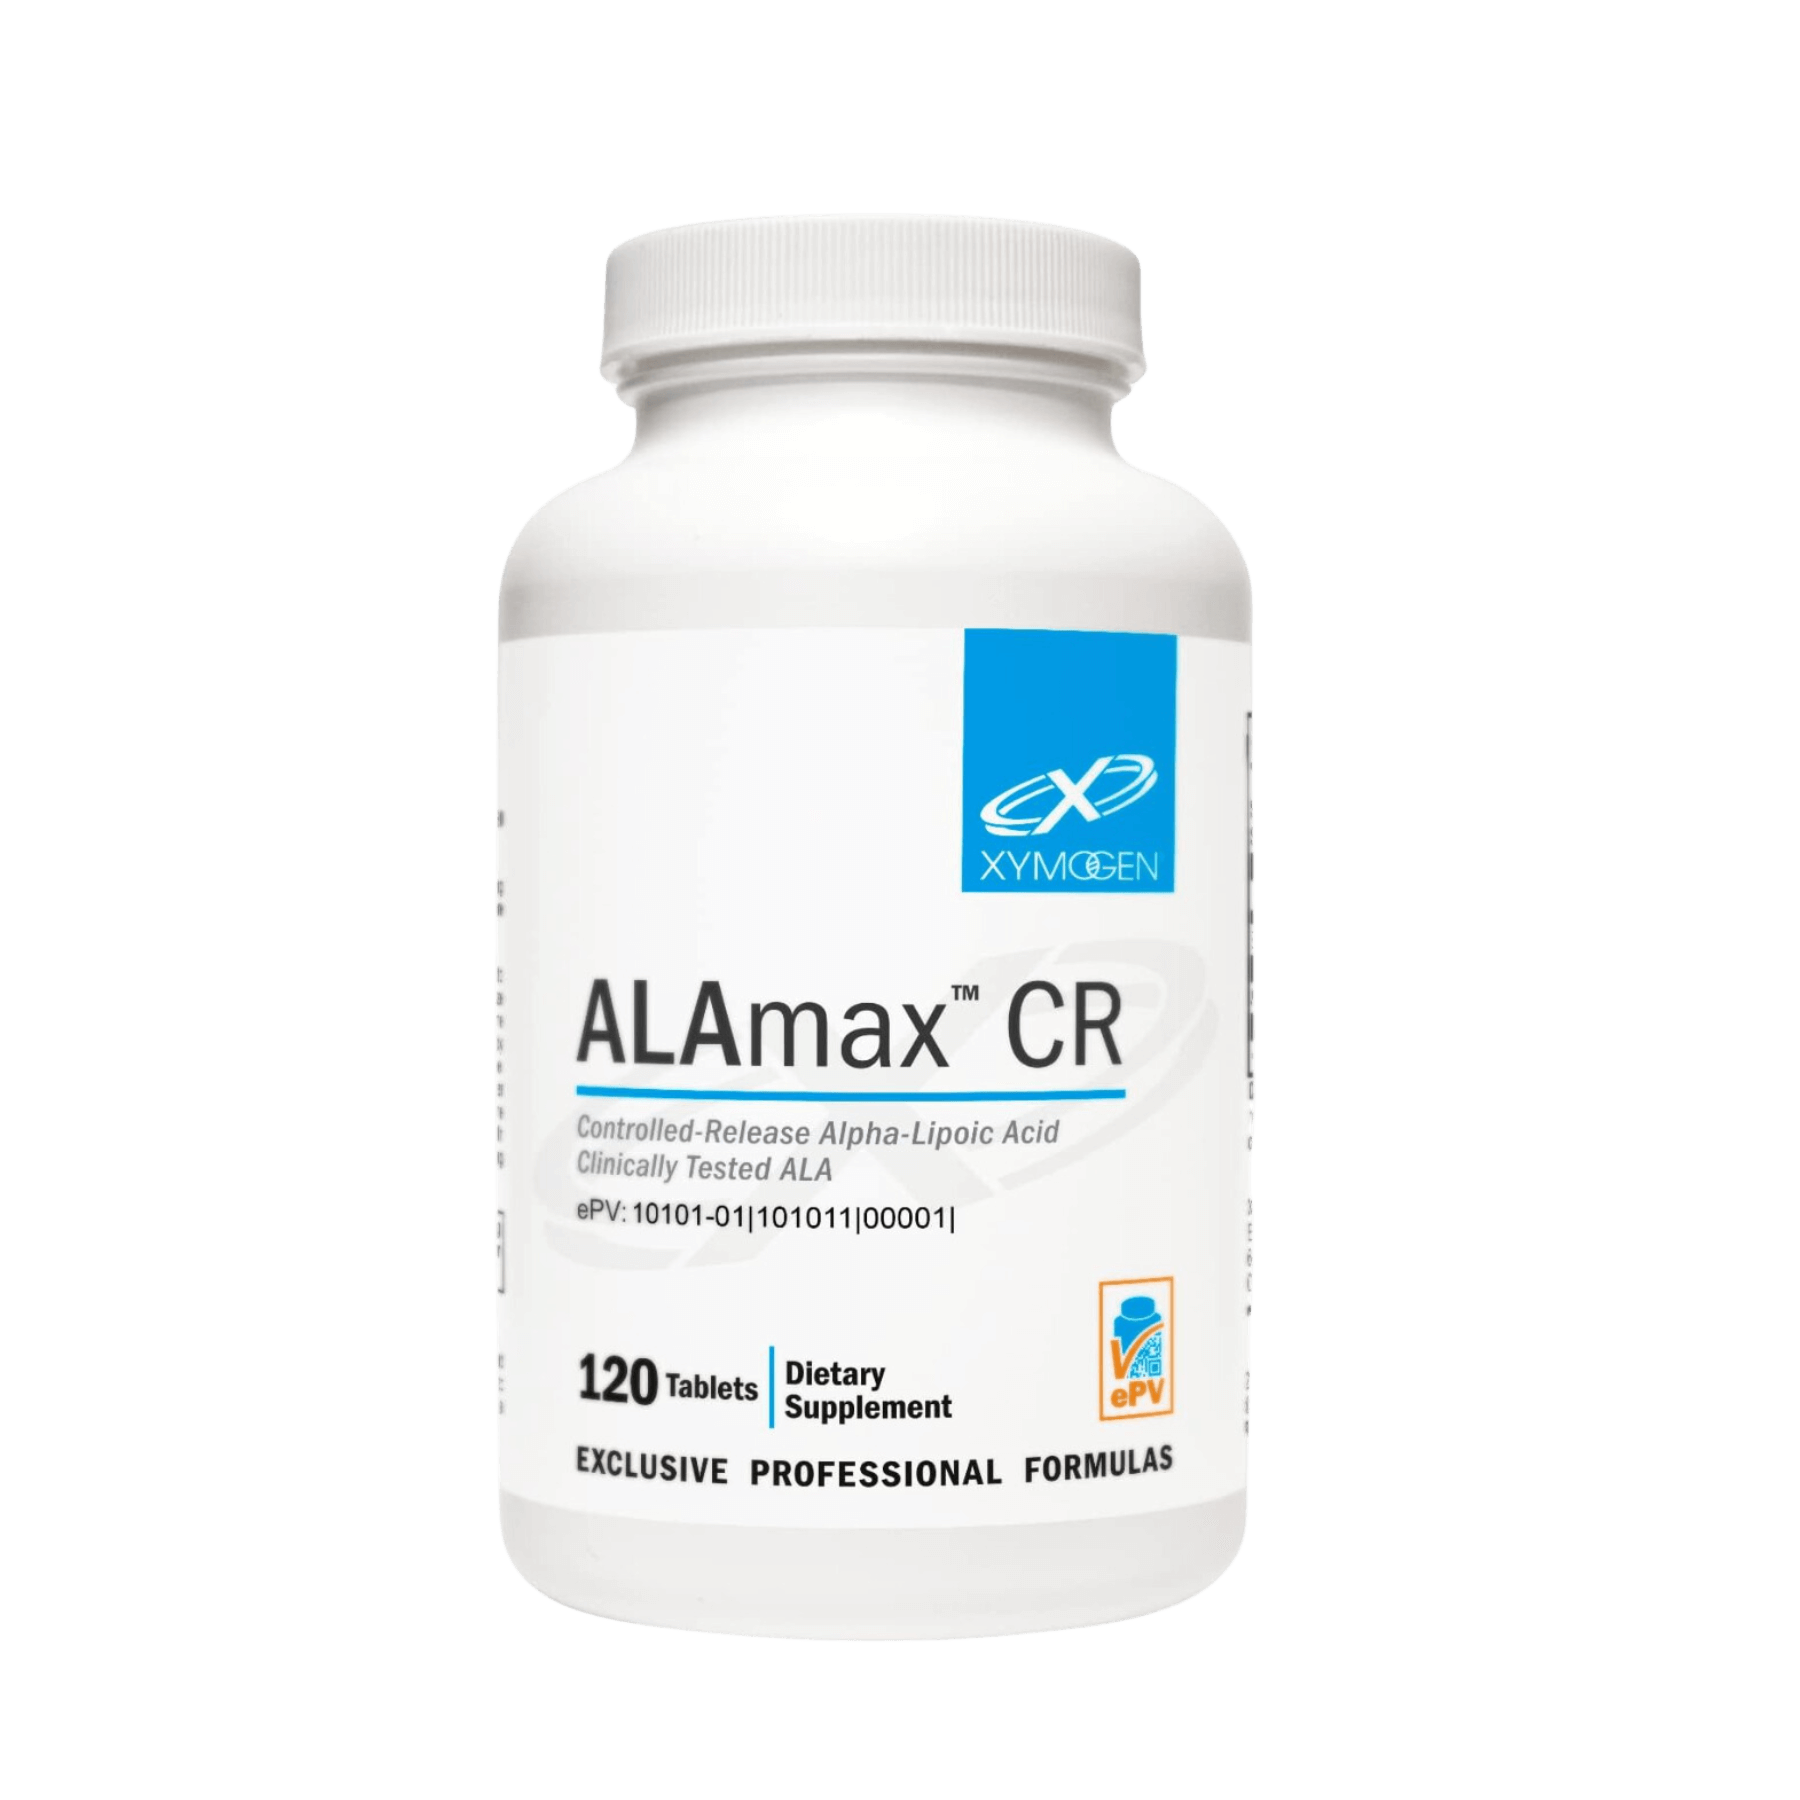 Xymogen Alamax CR capsules